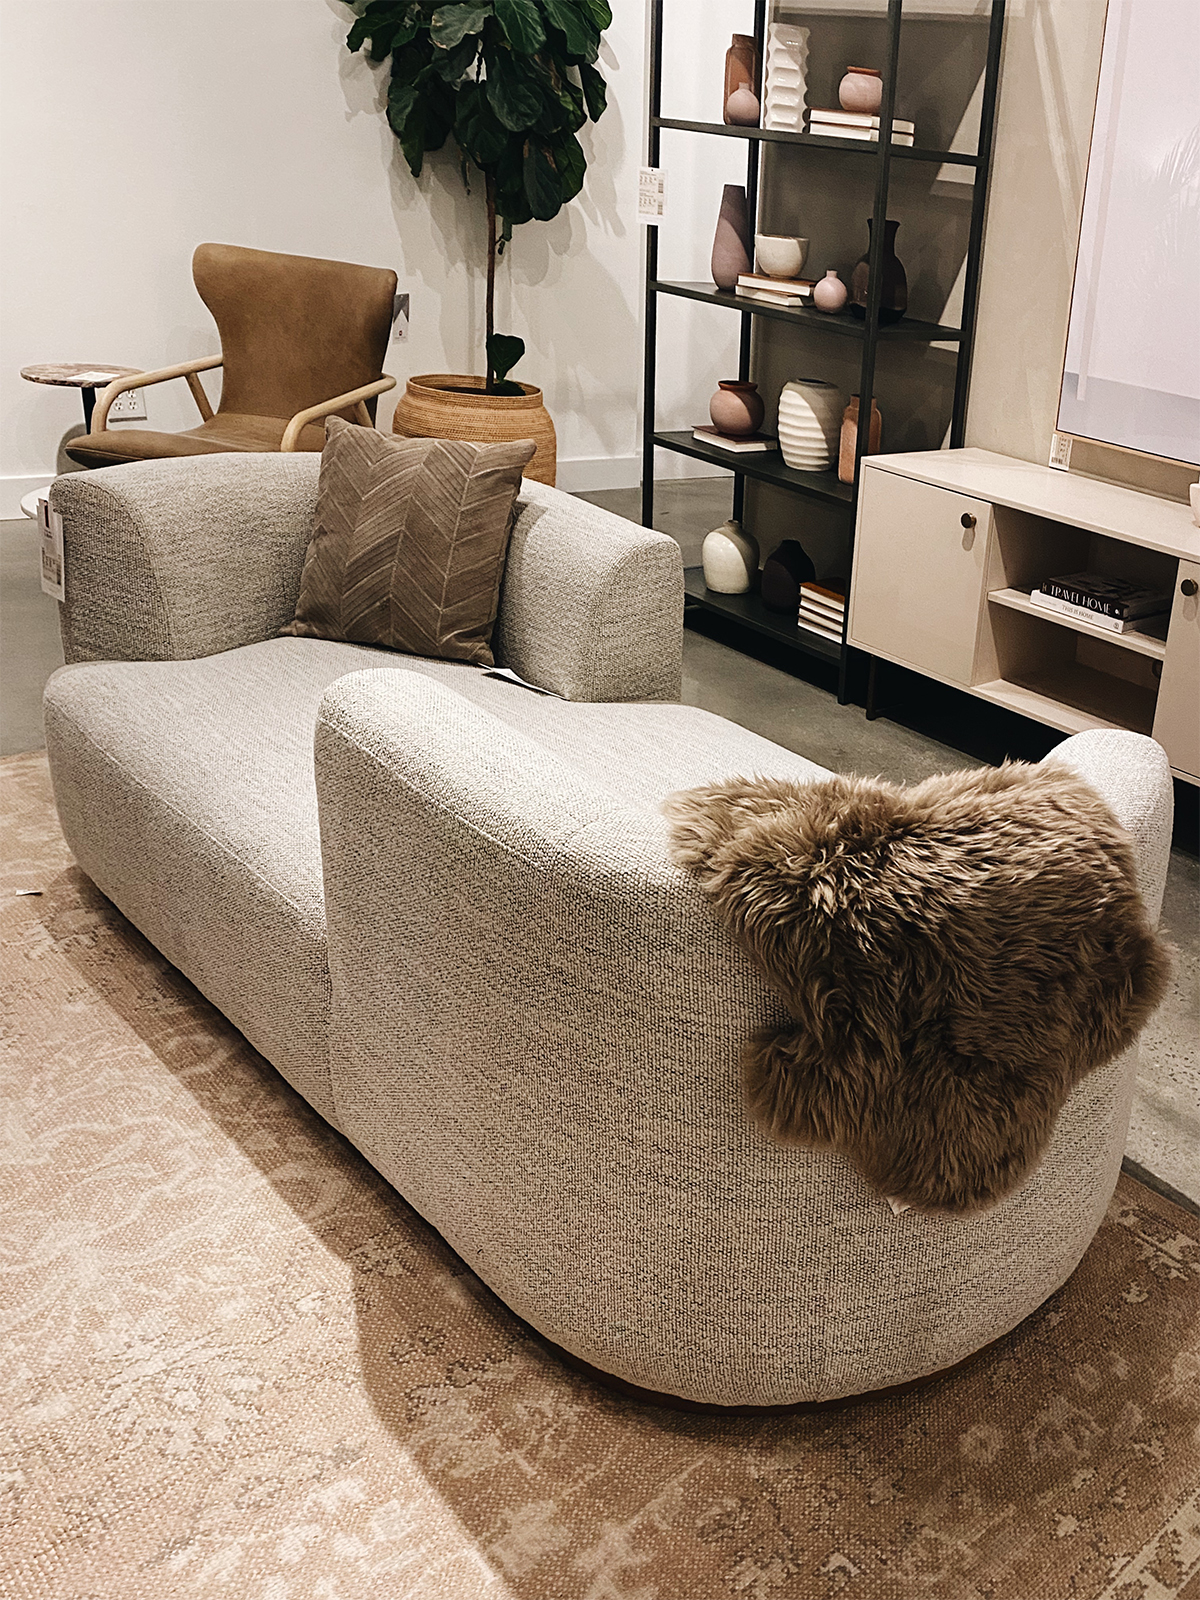 Organic modern sofa in a design showroom